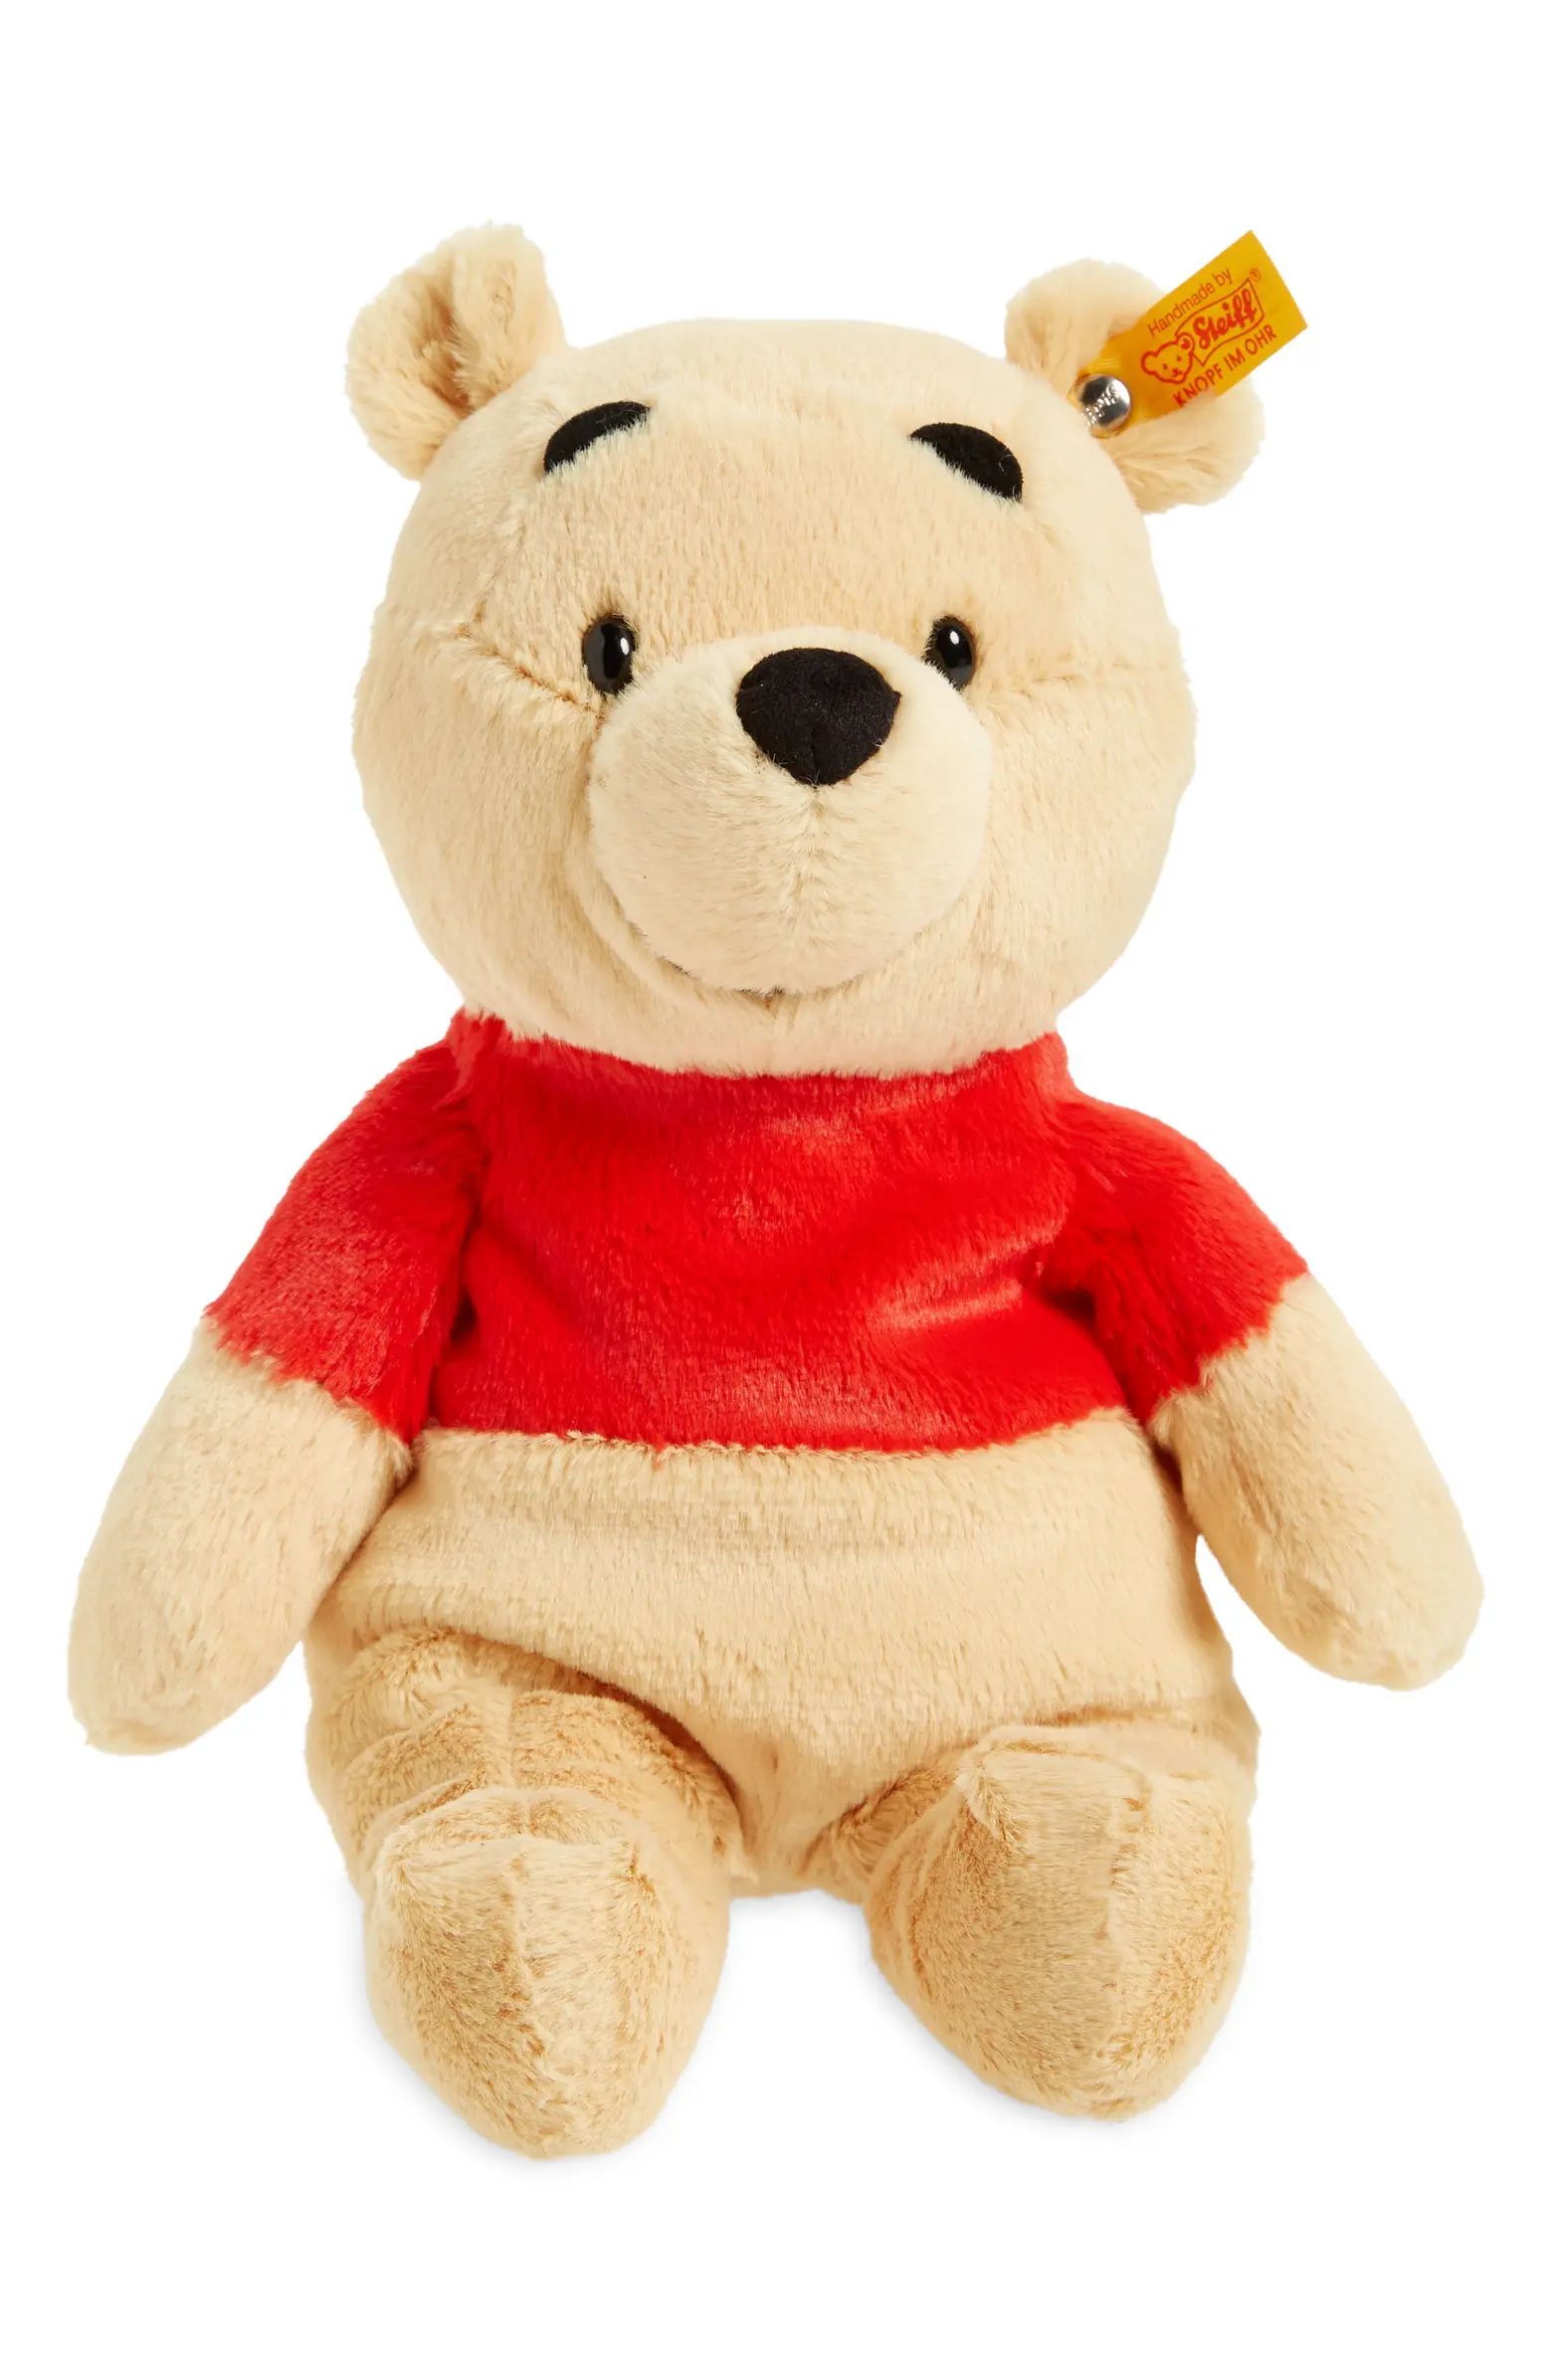 x Disney Winnie the Pooh Stuffed Animal | Nordstrom